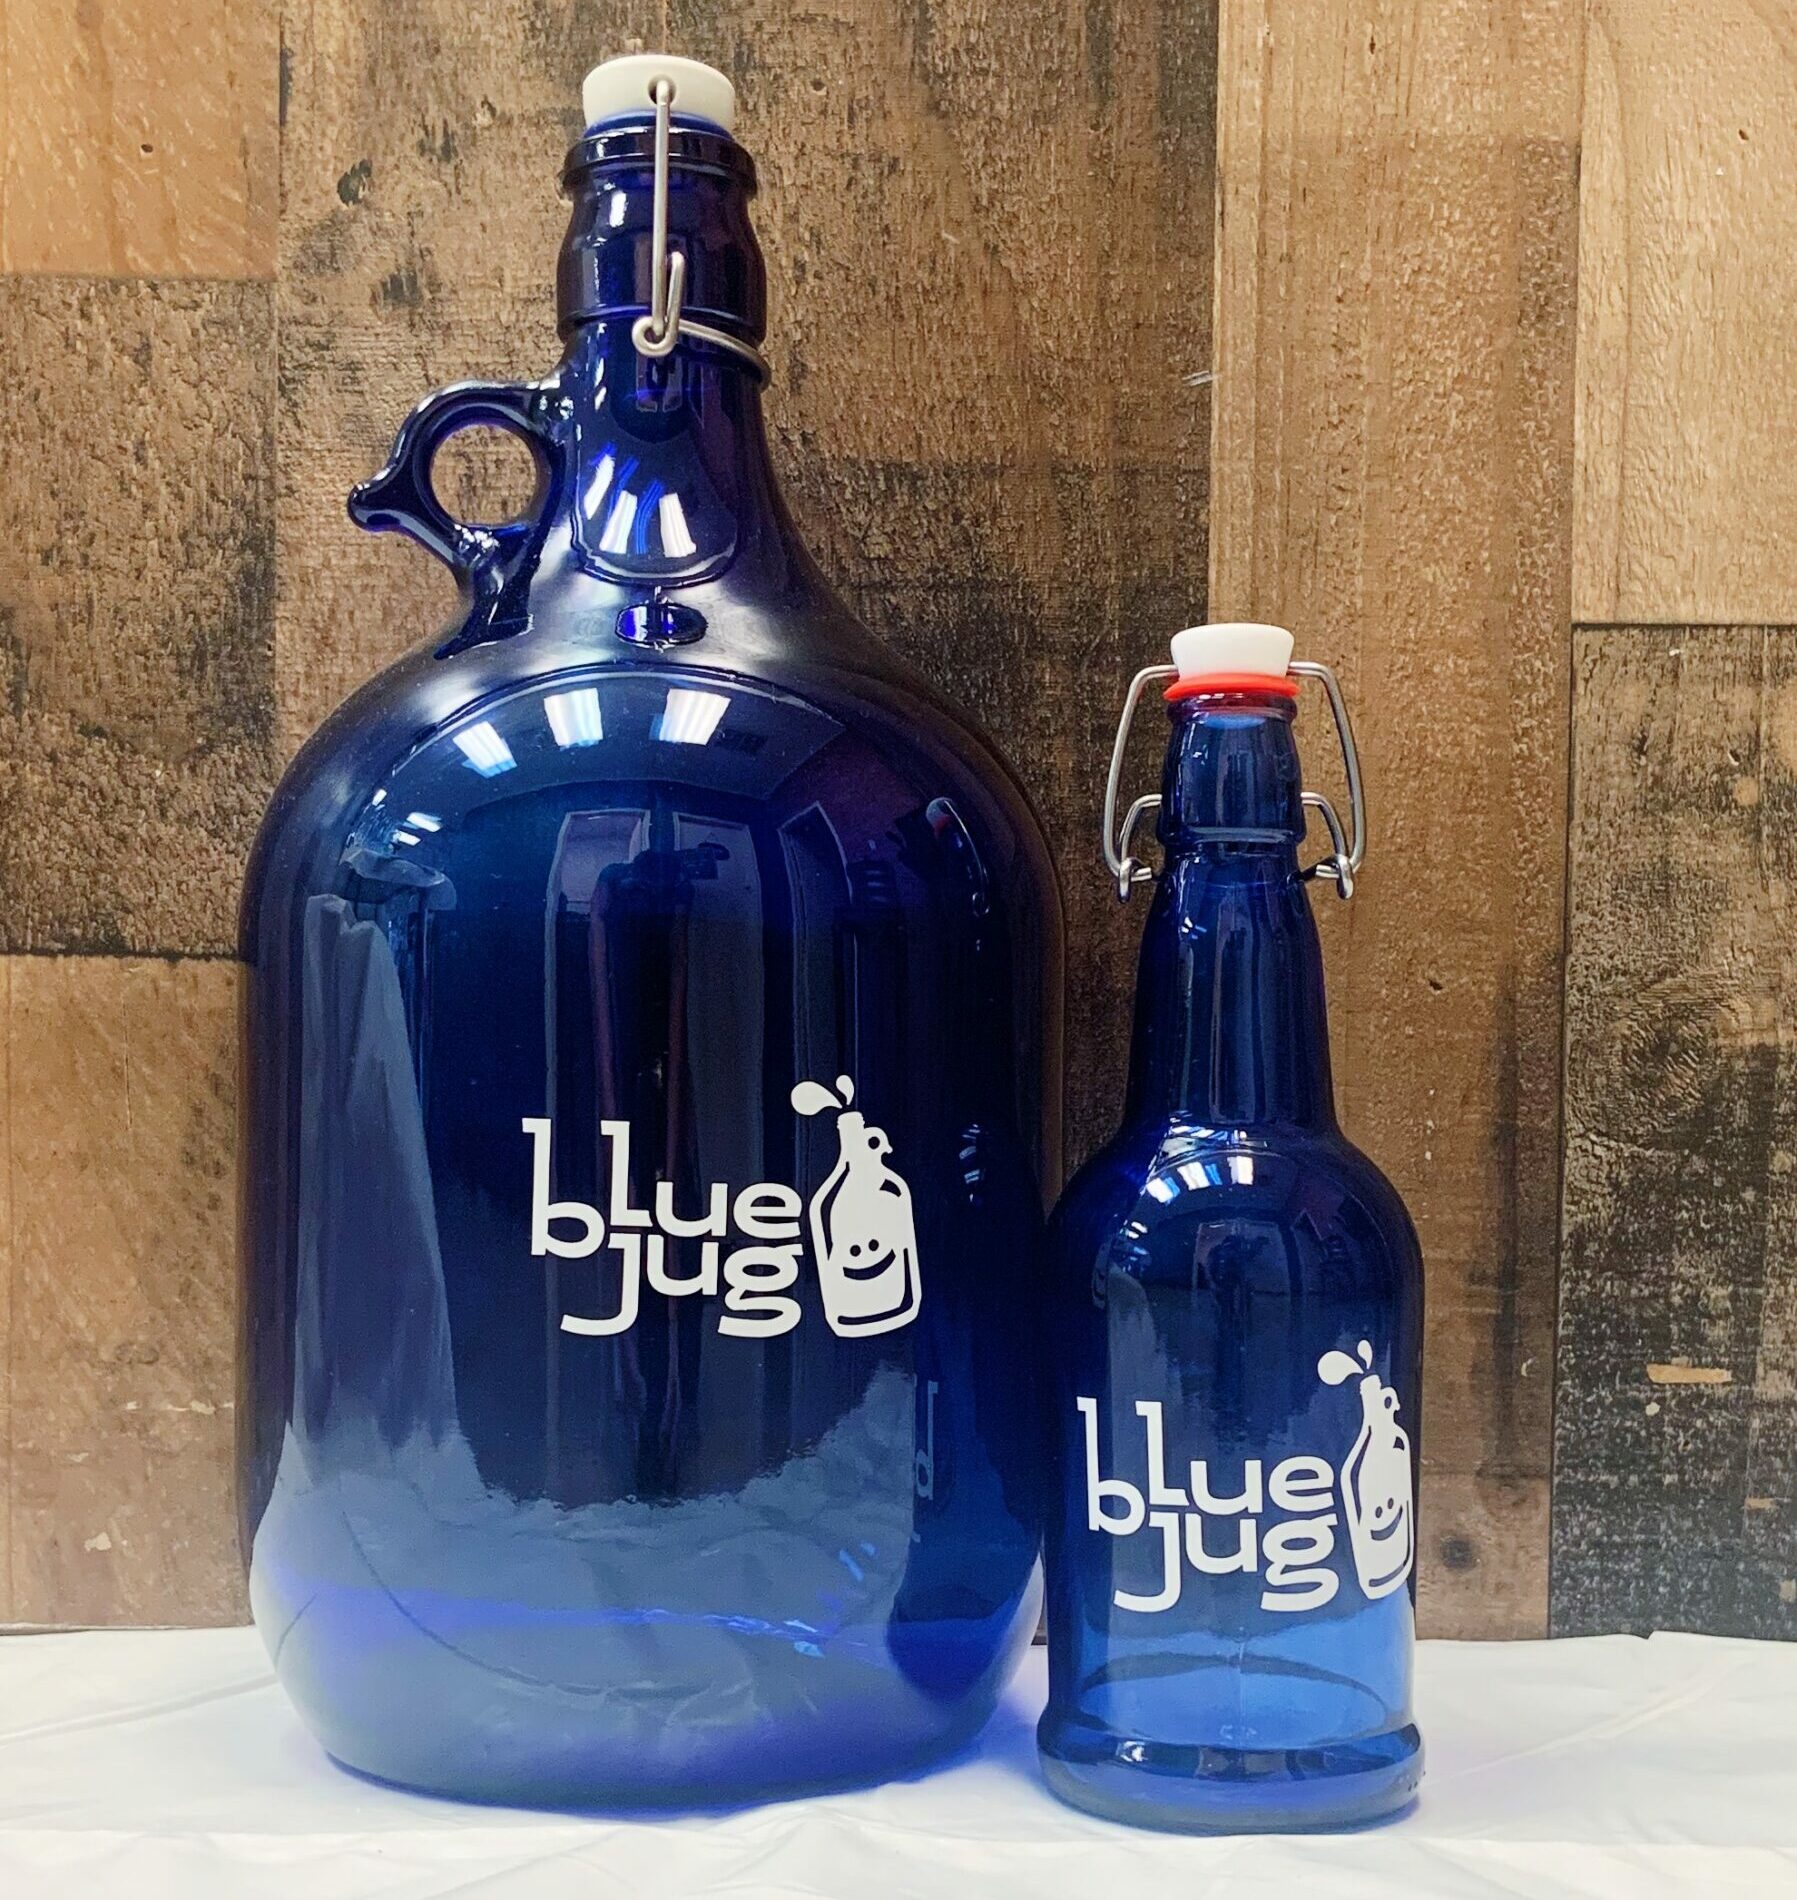 Two ‘Blue Jug’ bottles in dark blue glass against a rustic wooden backdrop